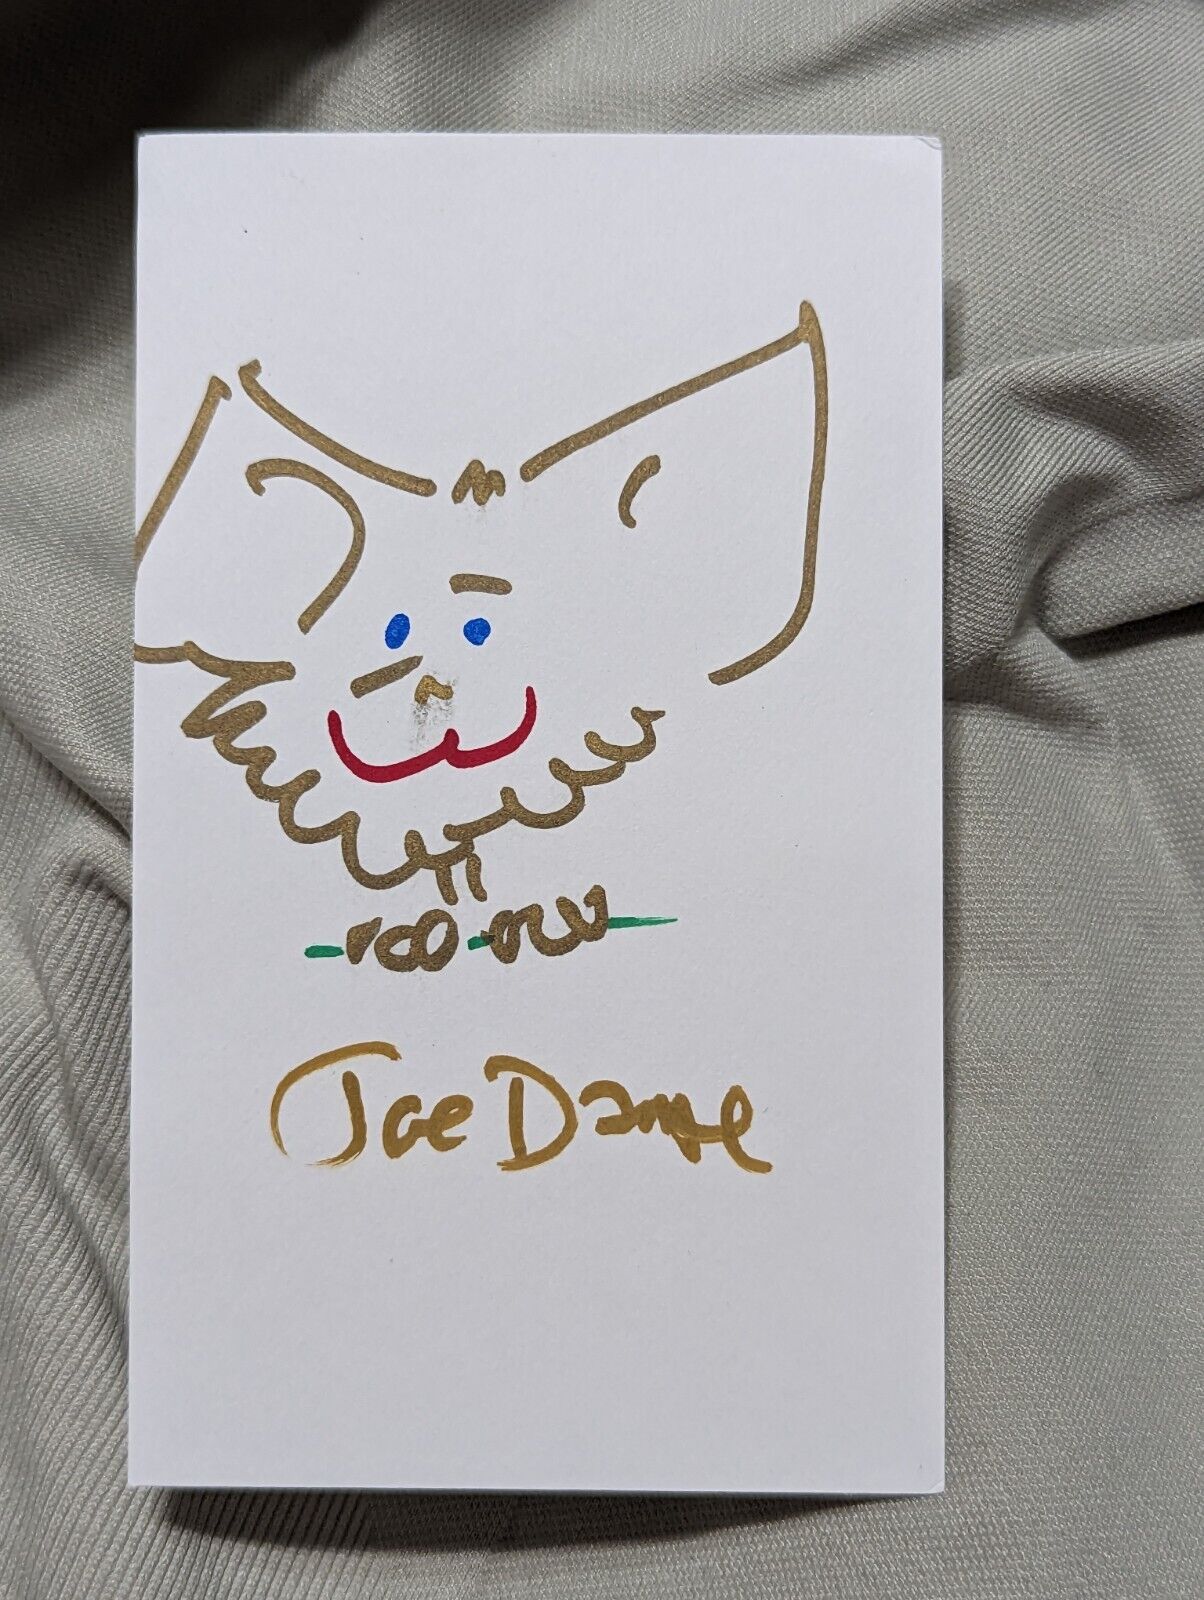 Joe Dante Gemlins Autograph Hand Drawn Sketch  See Description 